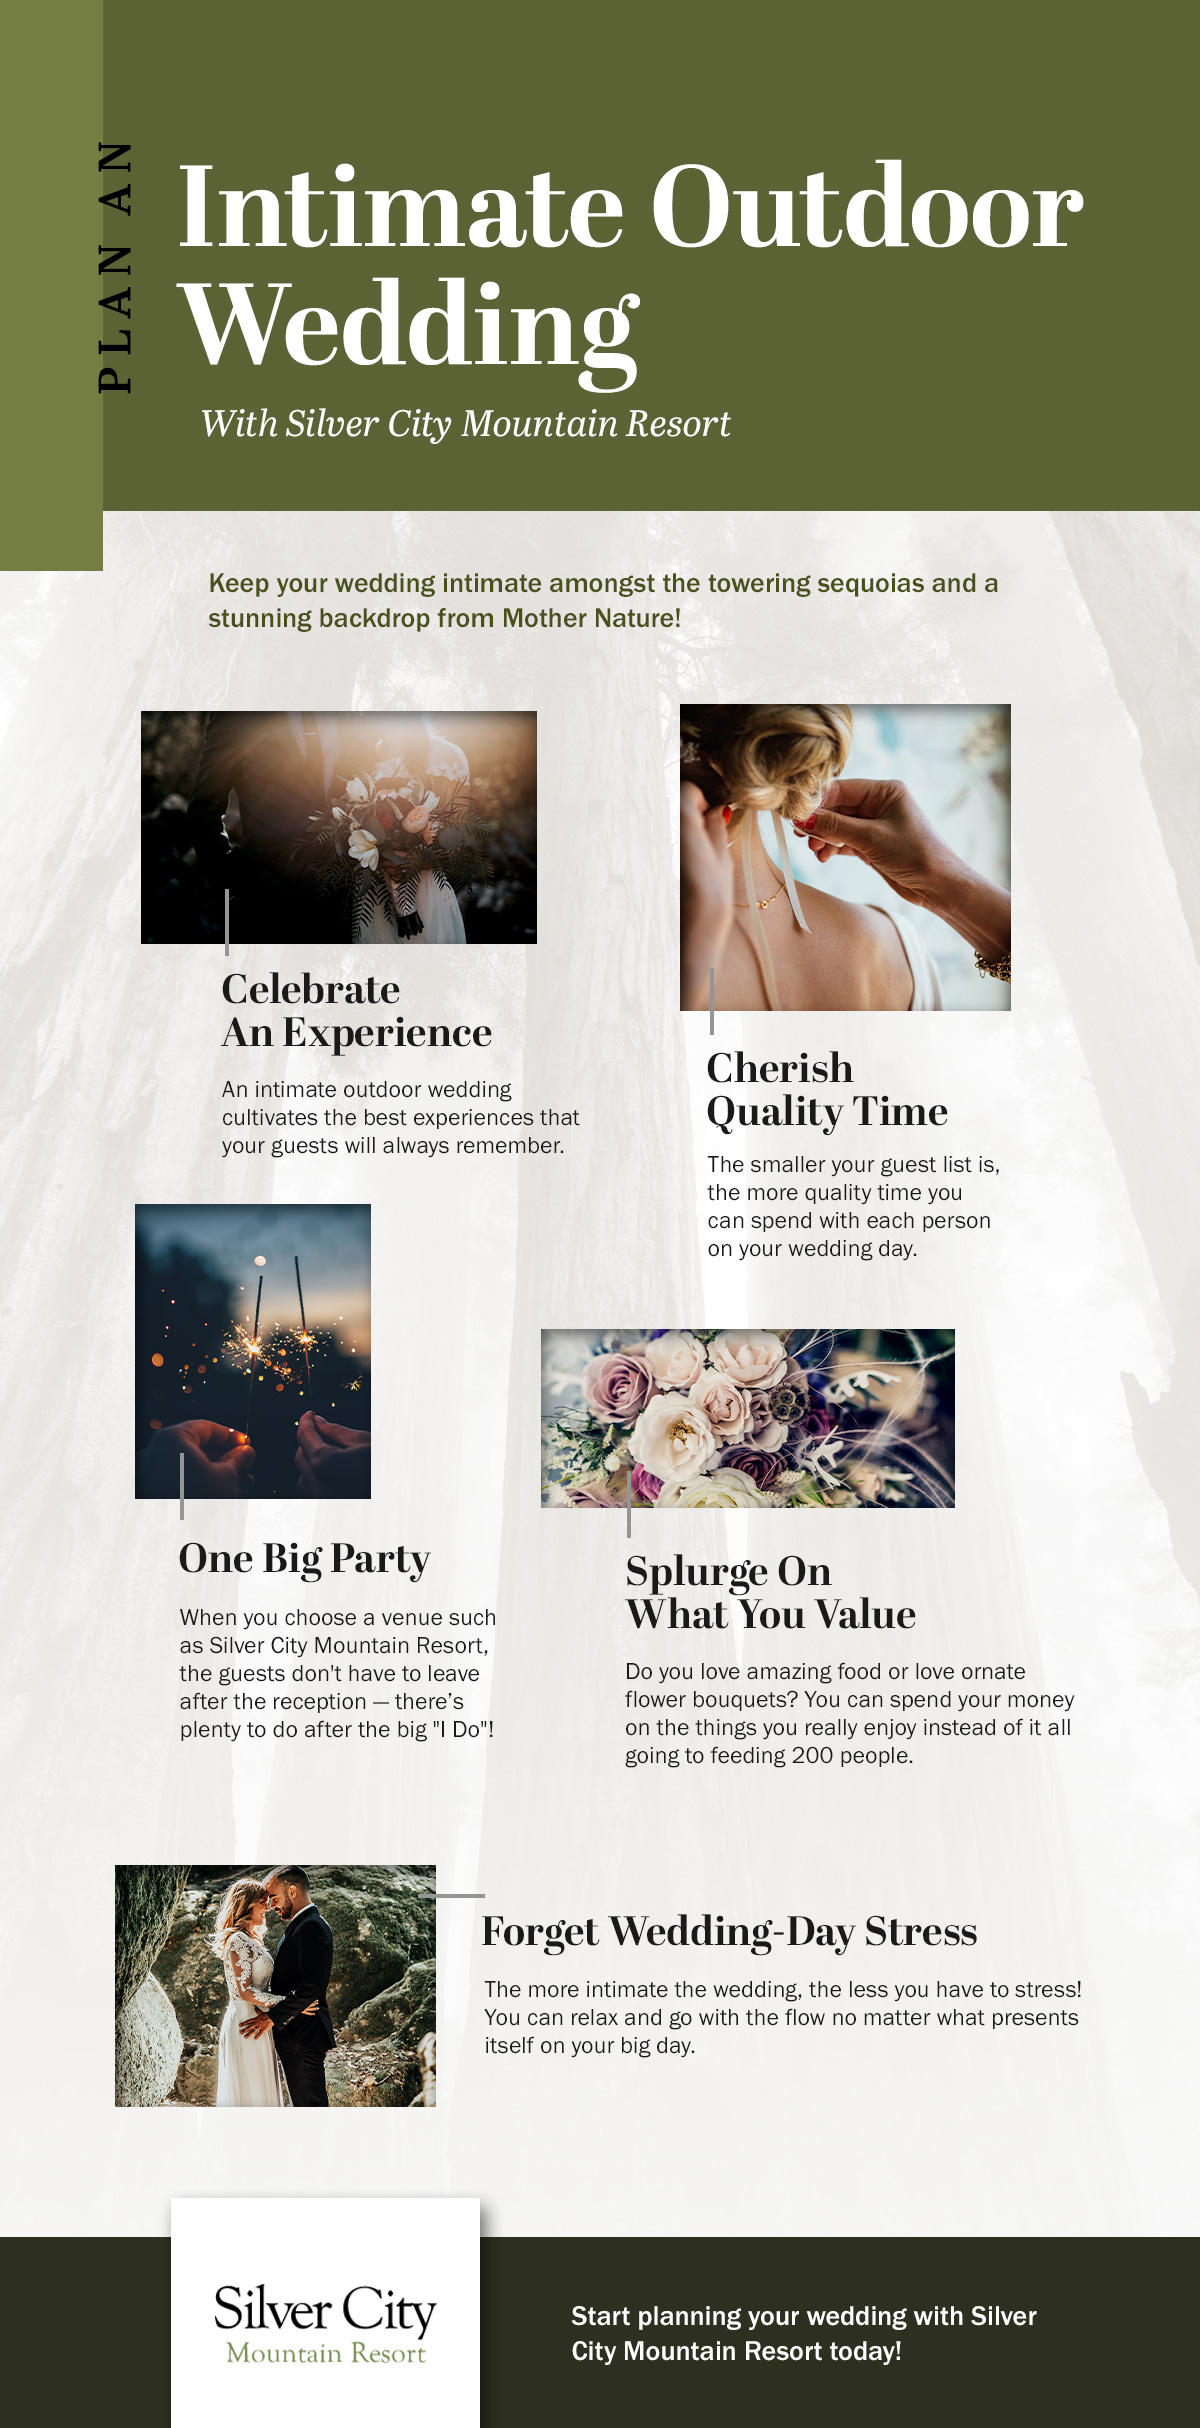 Plan-An-Intimate-Outdoor-Wedding_Infographic.jpg